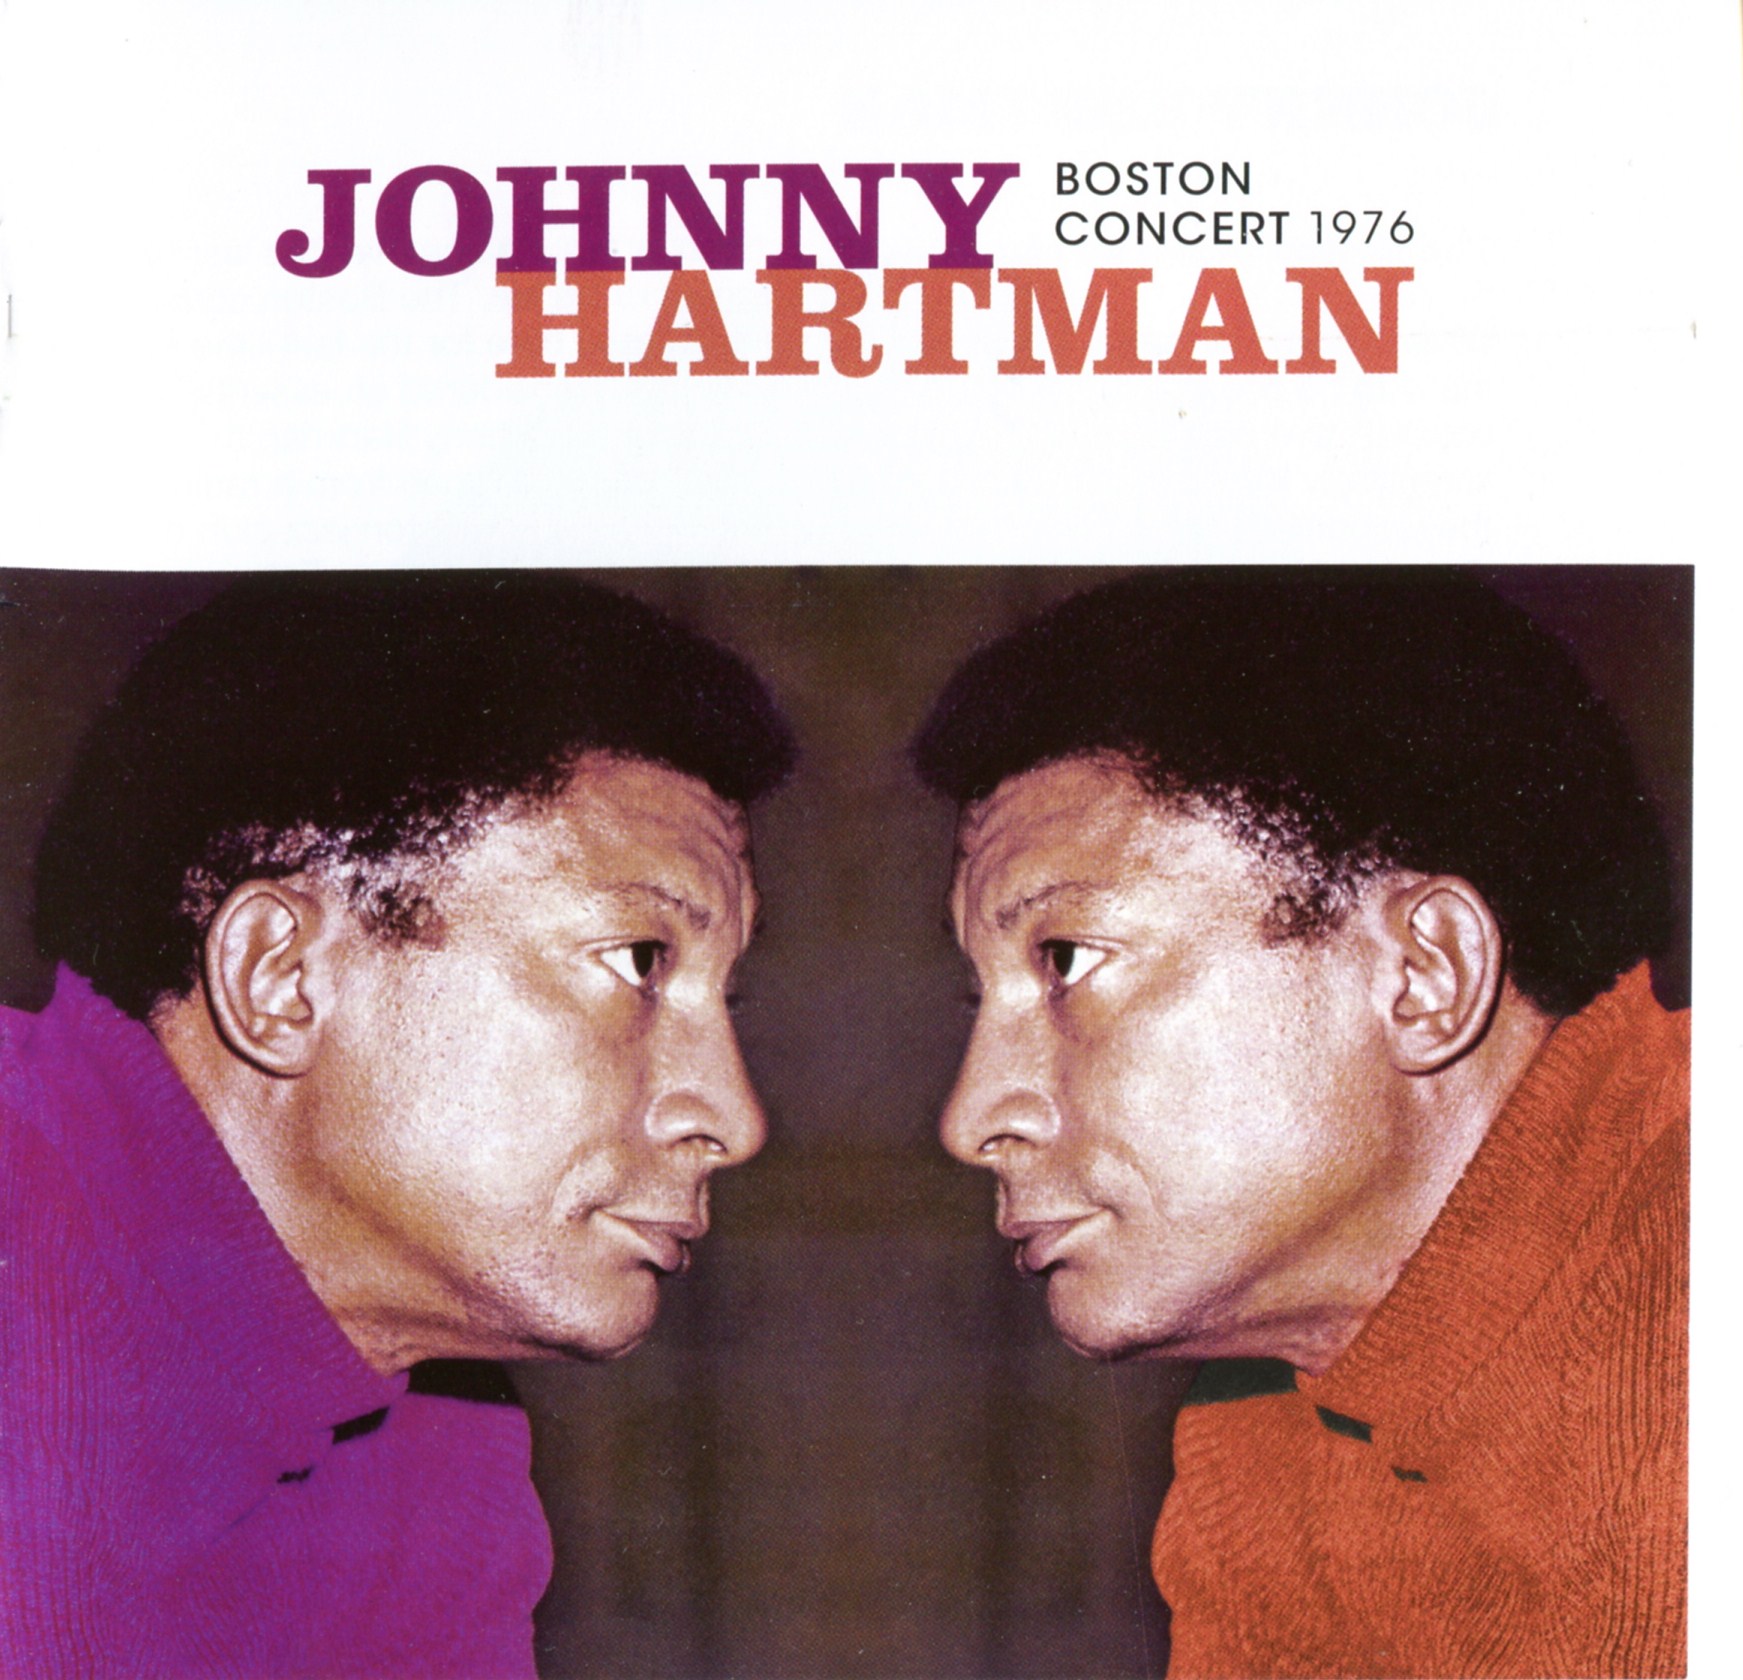 JOHNNY HARTMAN - Boston Concert 1976 cover 